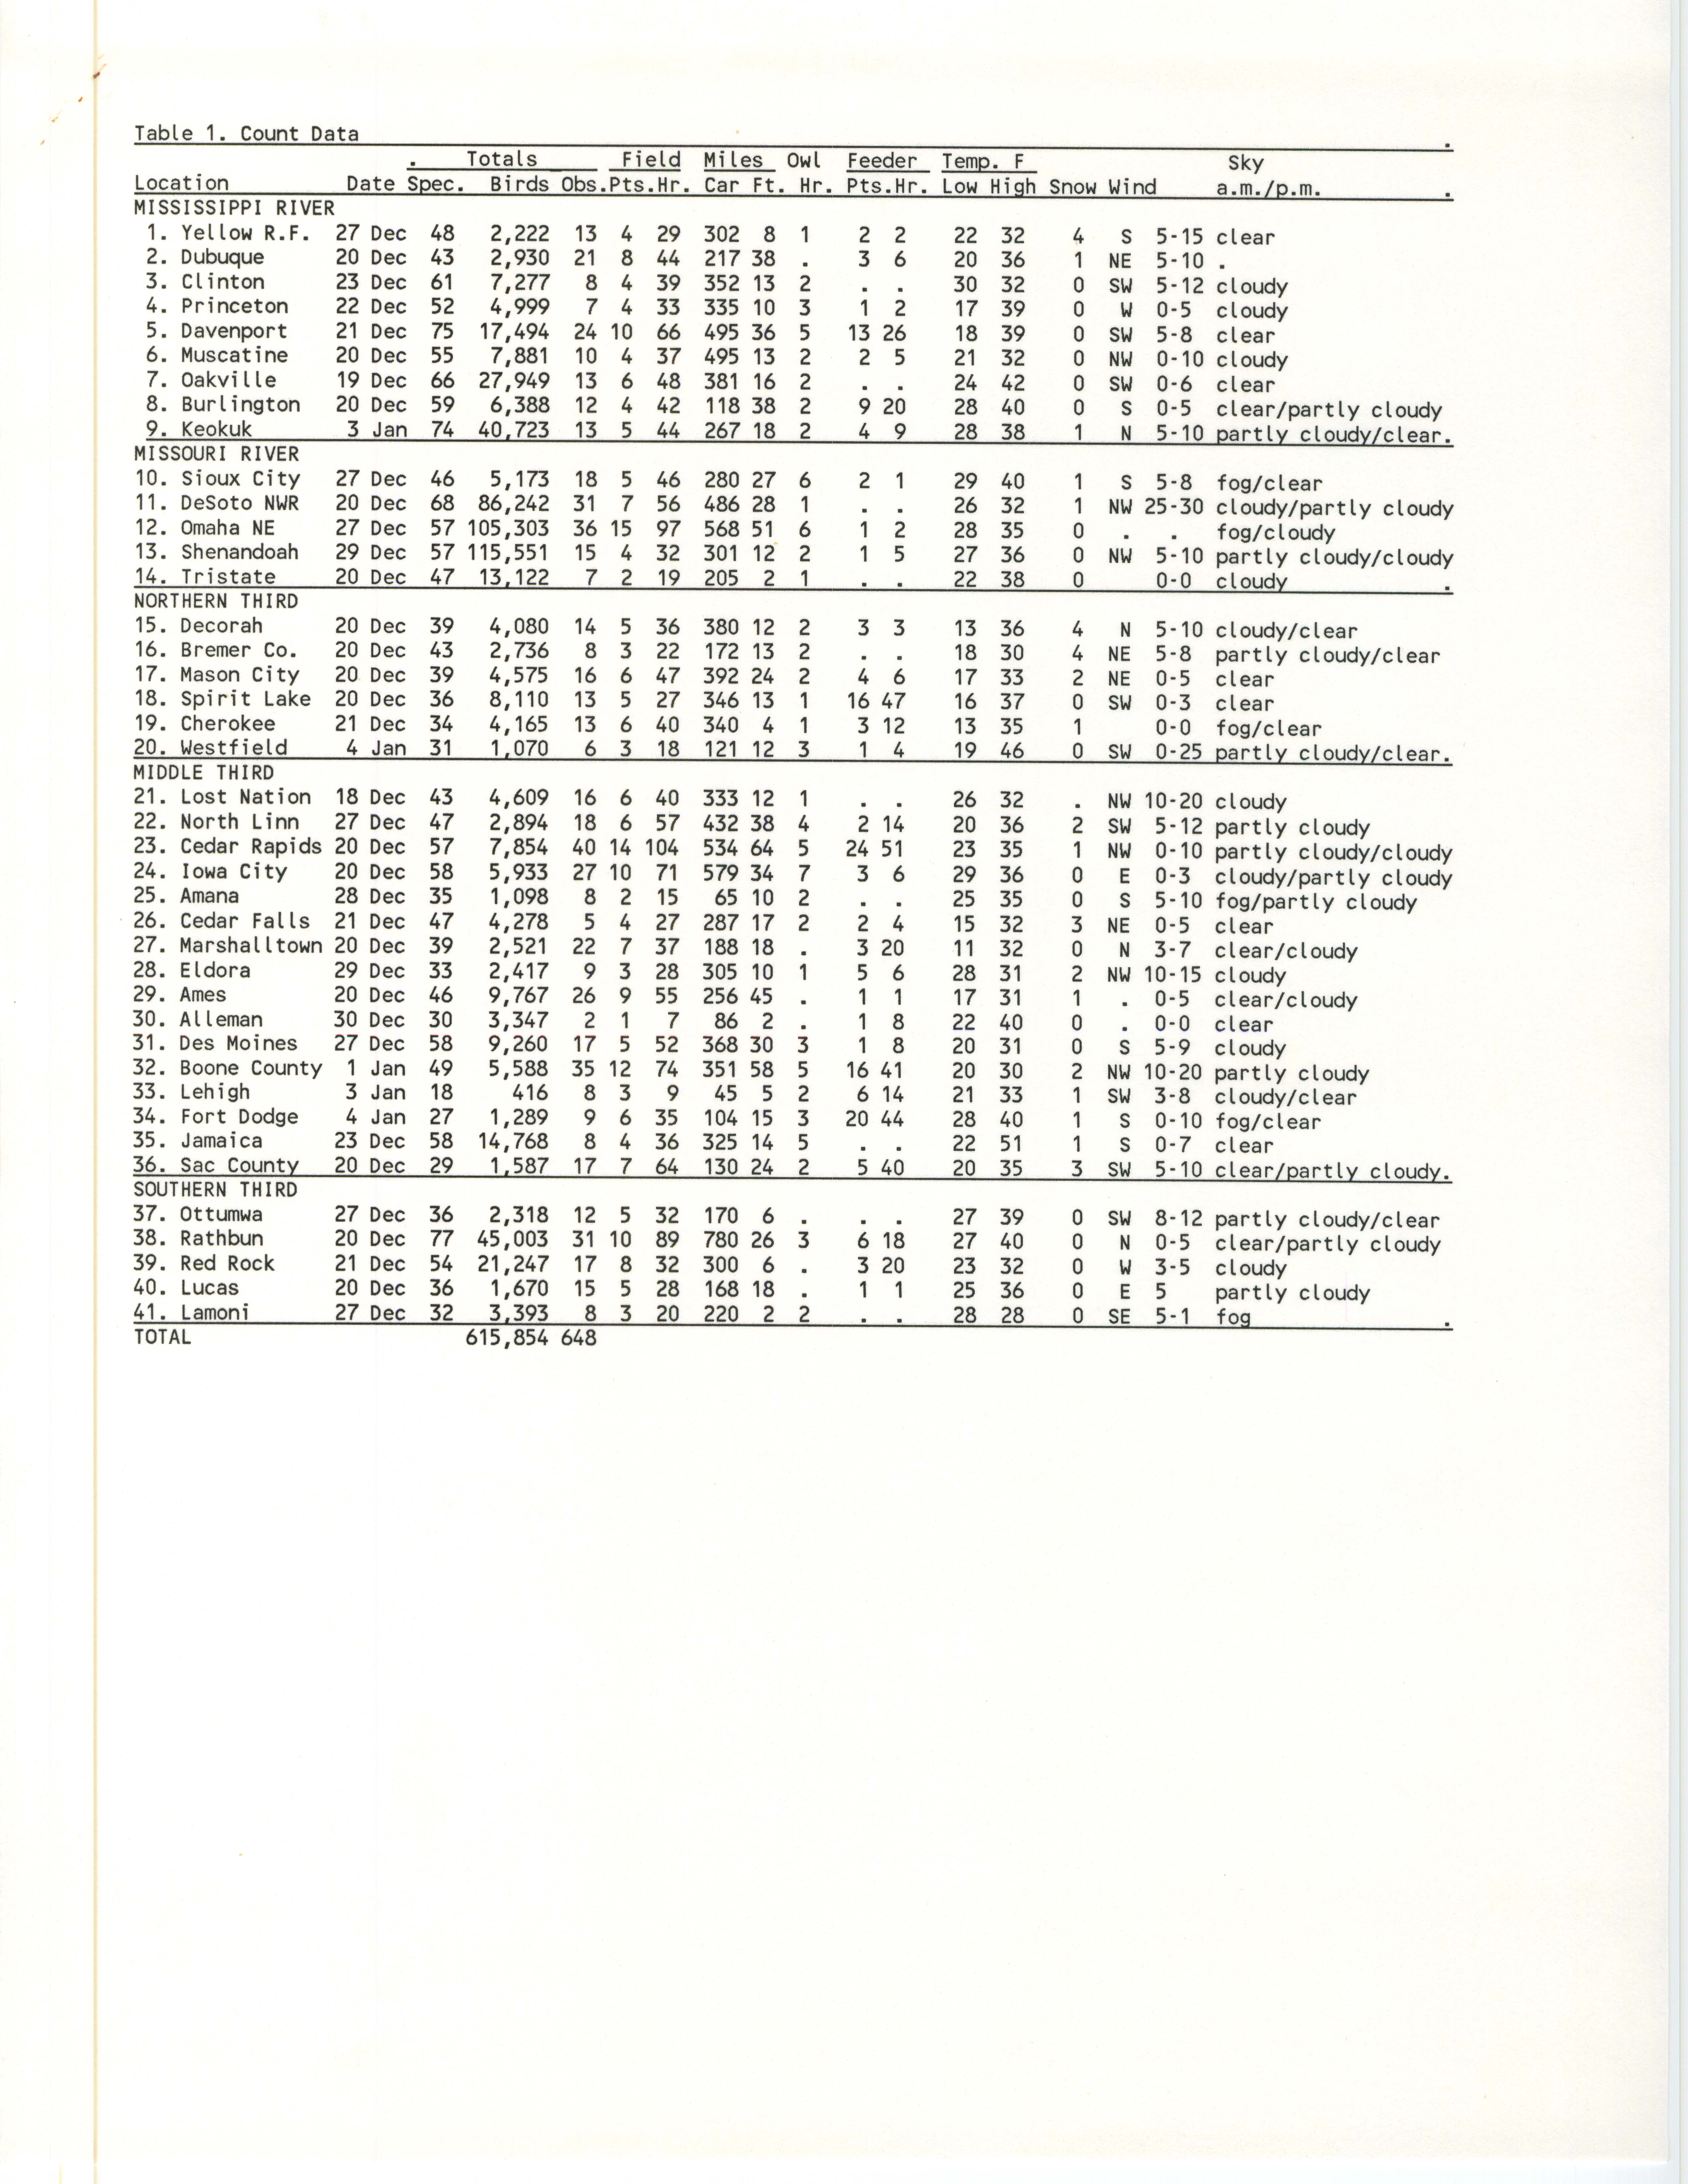 Christmas bird count data tables, 1986